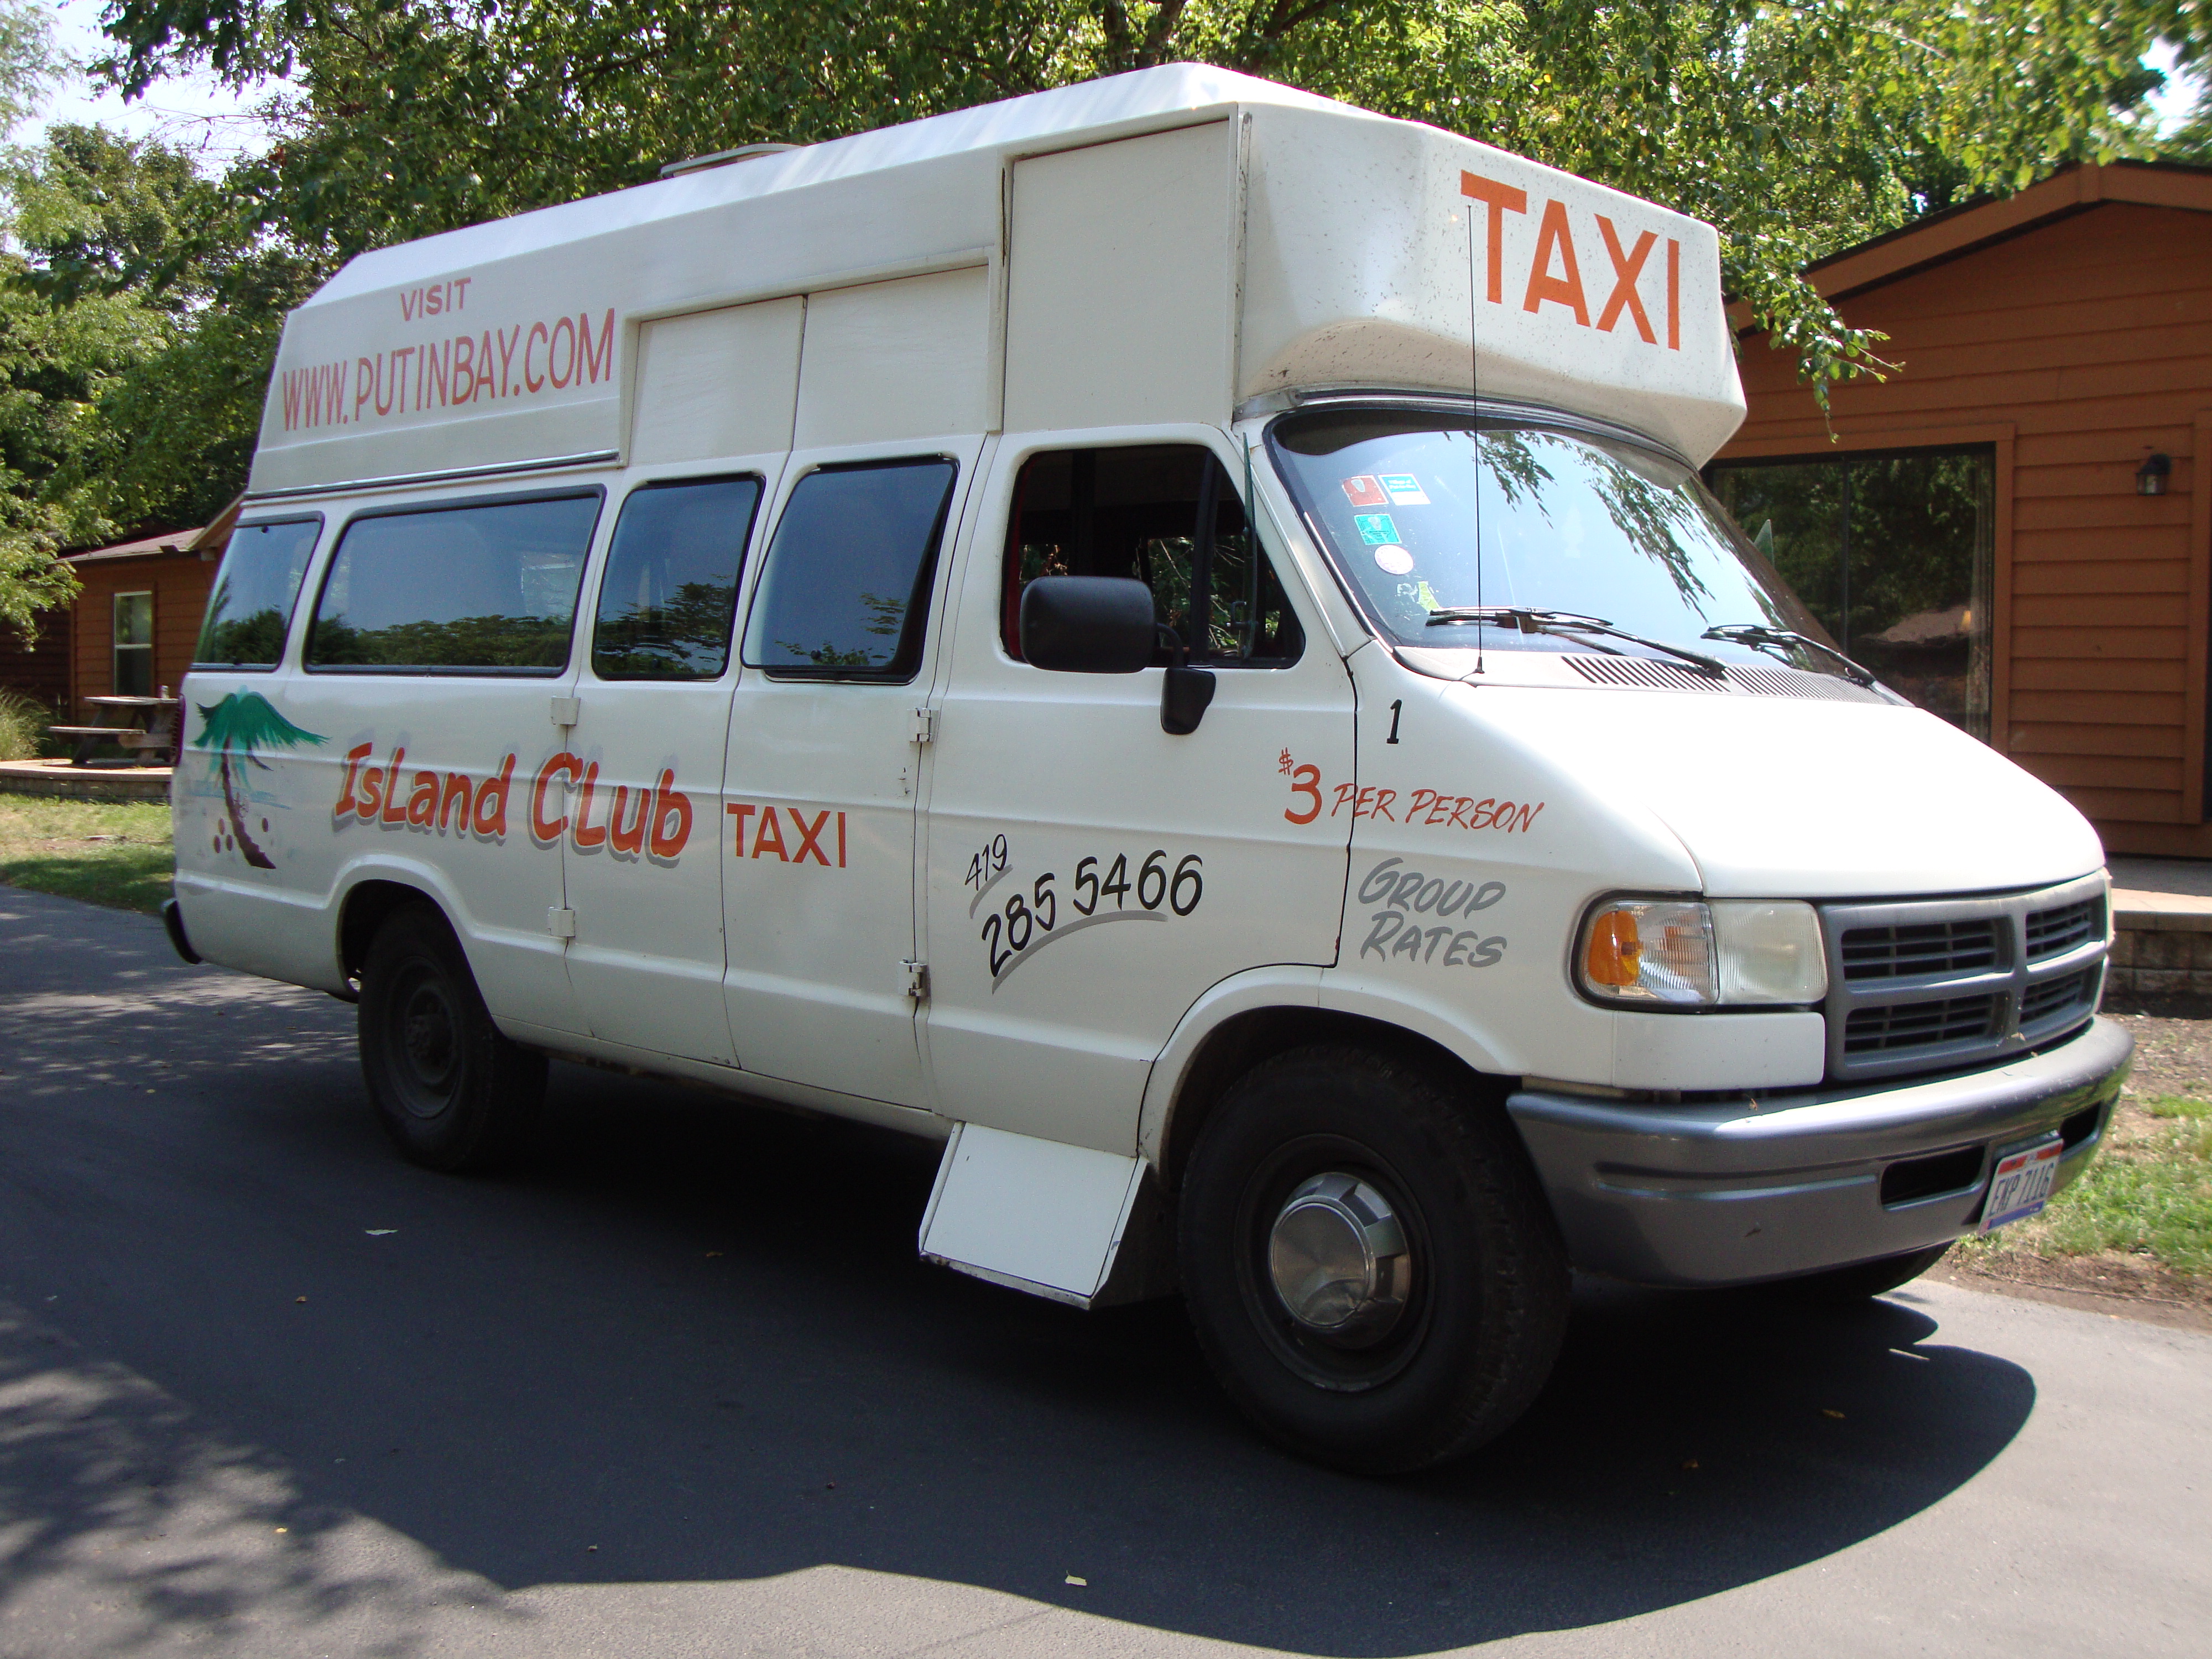 Island Club Taxi Service